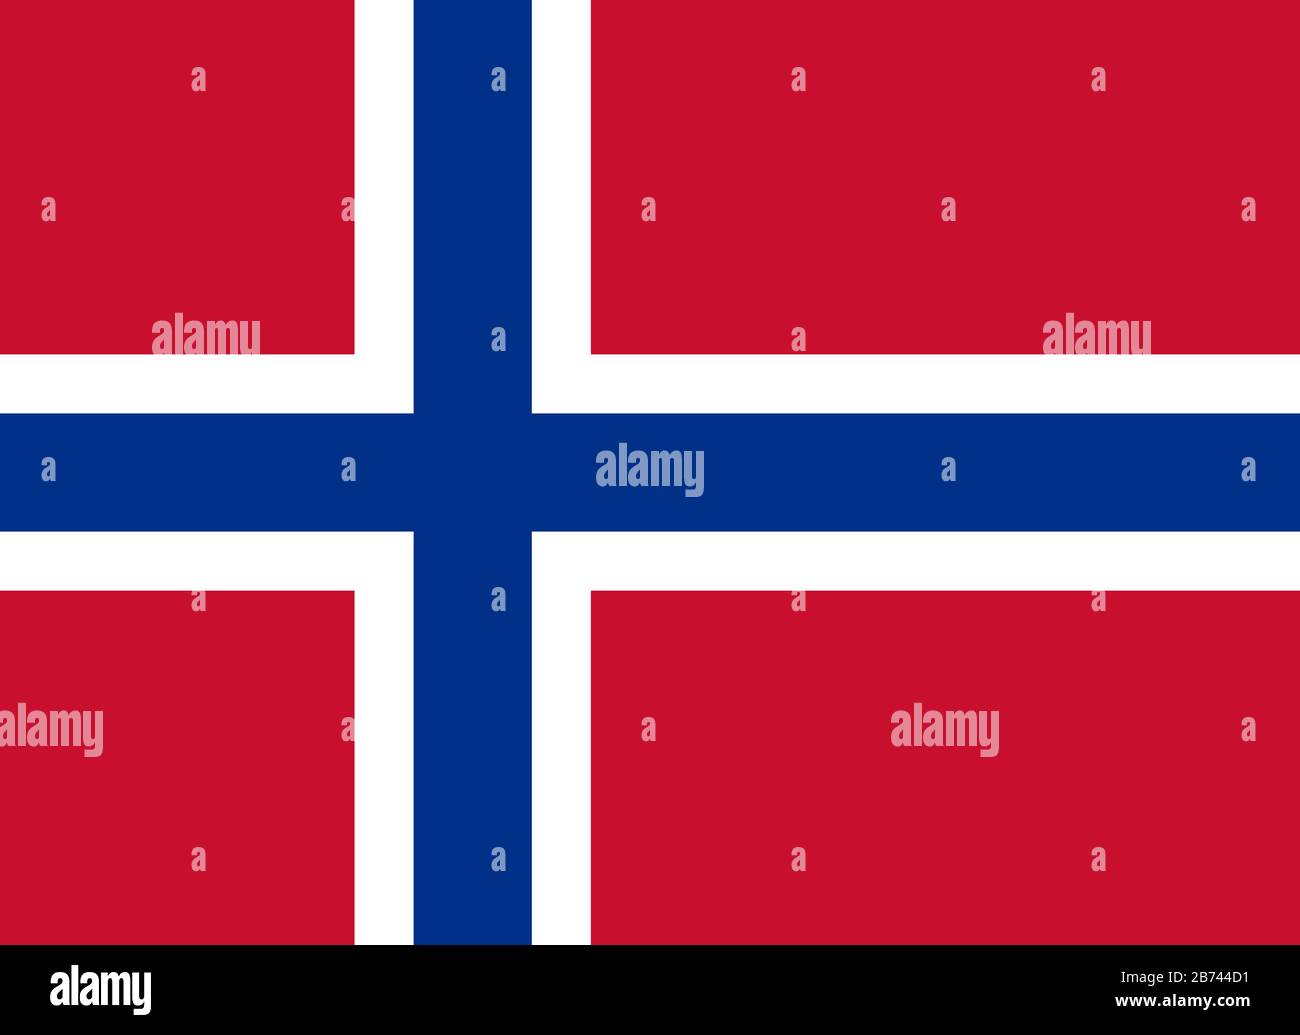 Flagge Norwegens - Standardverhältnis der norwegischen Flagge - True RGB-Farbmodus Stockfoto